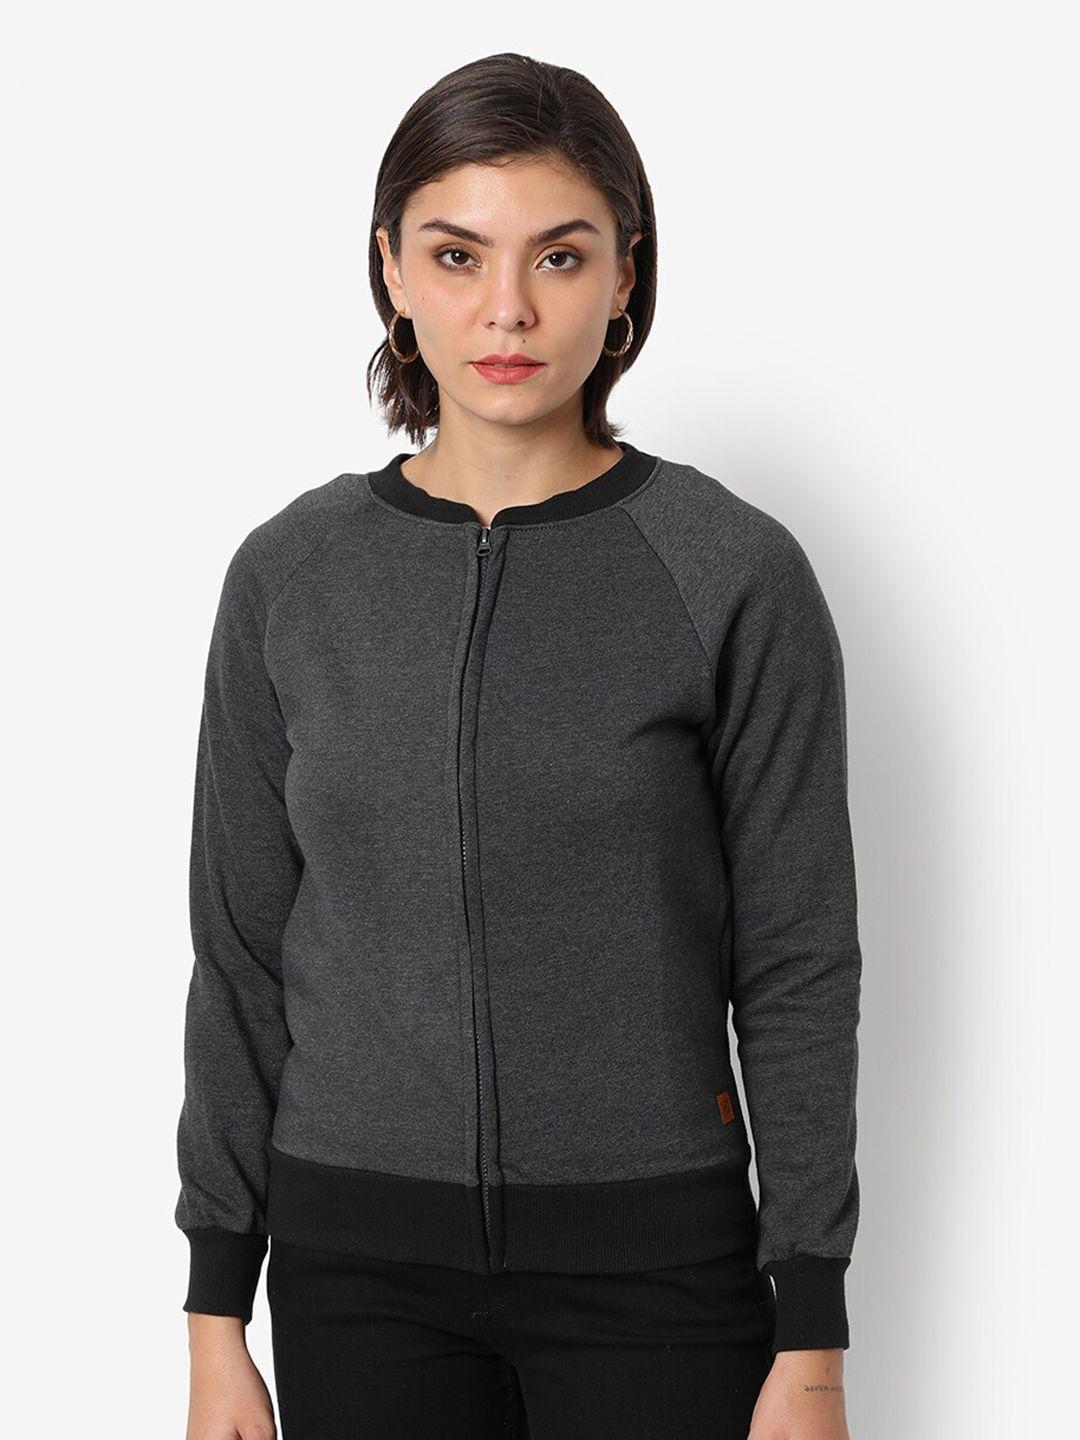 campus sutra women charcoal solid zipper cotton sweatshirt